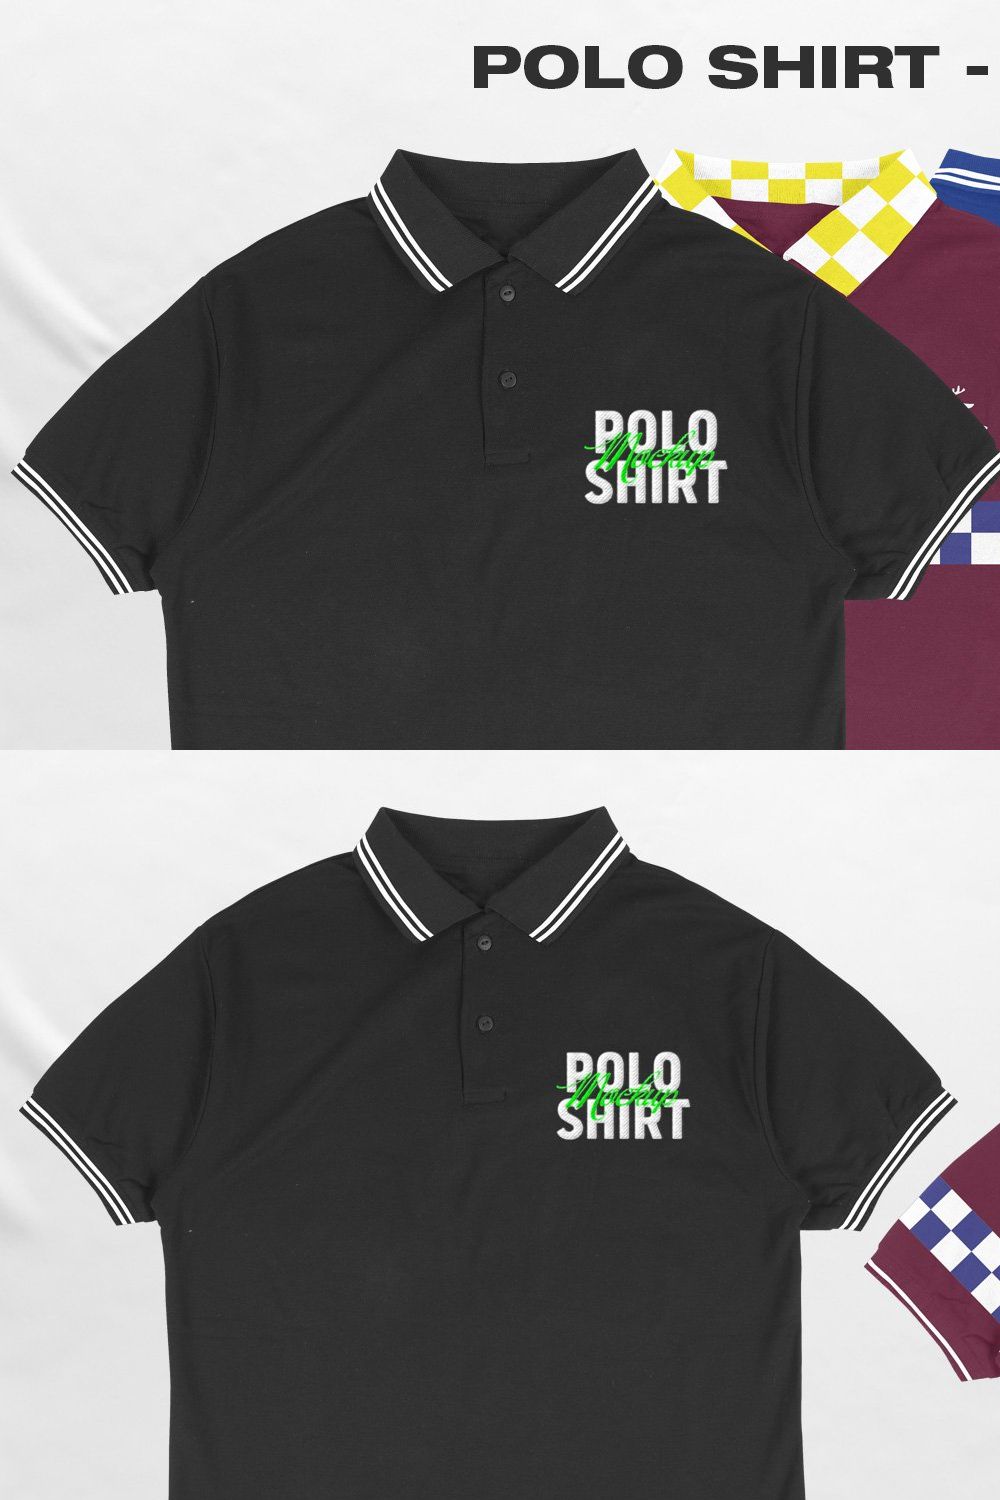 Polo Shirt - Mockup pinterest preview image.